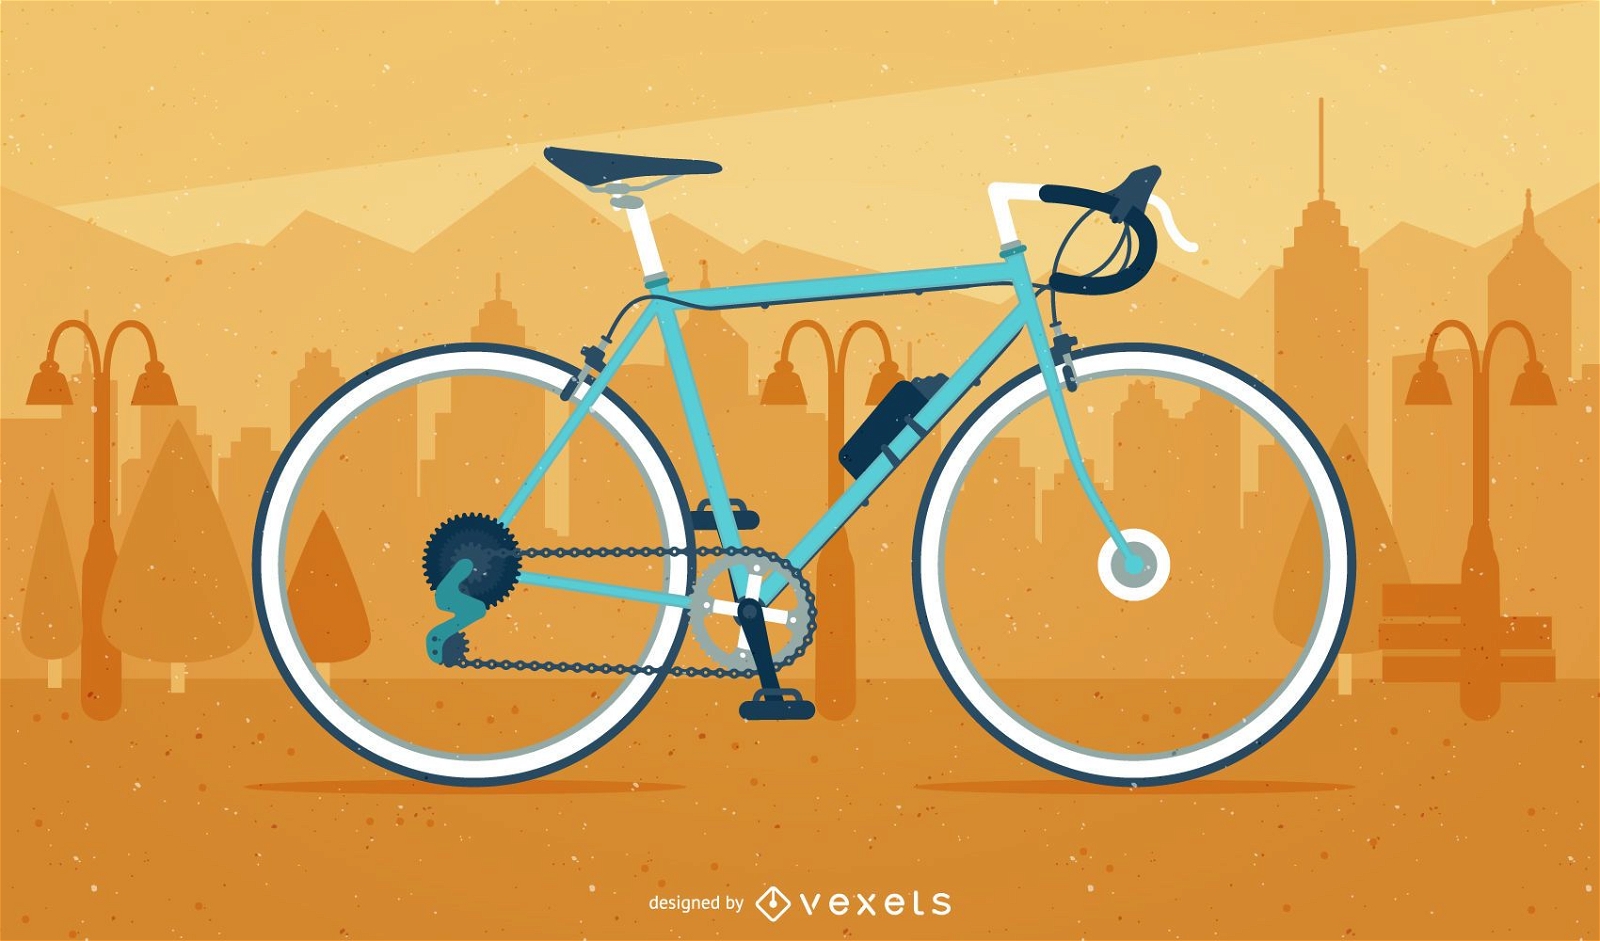 Bicicleta ilustrada sobre un paisaje urbano.